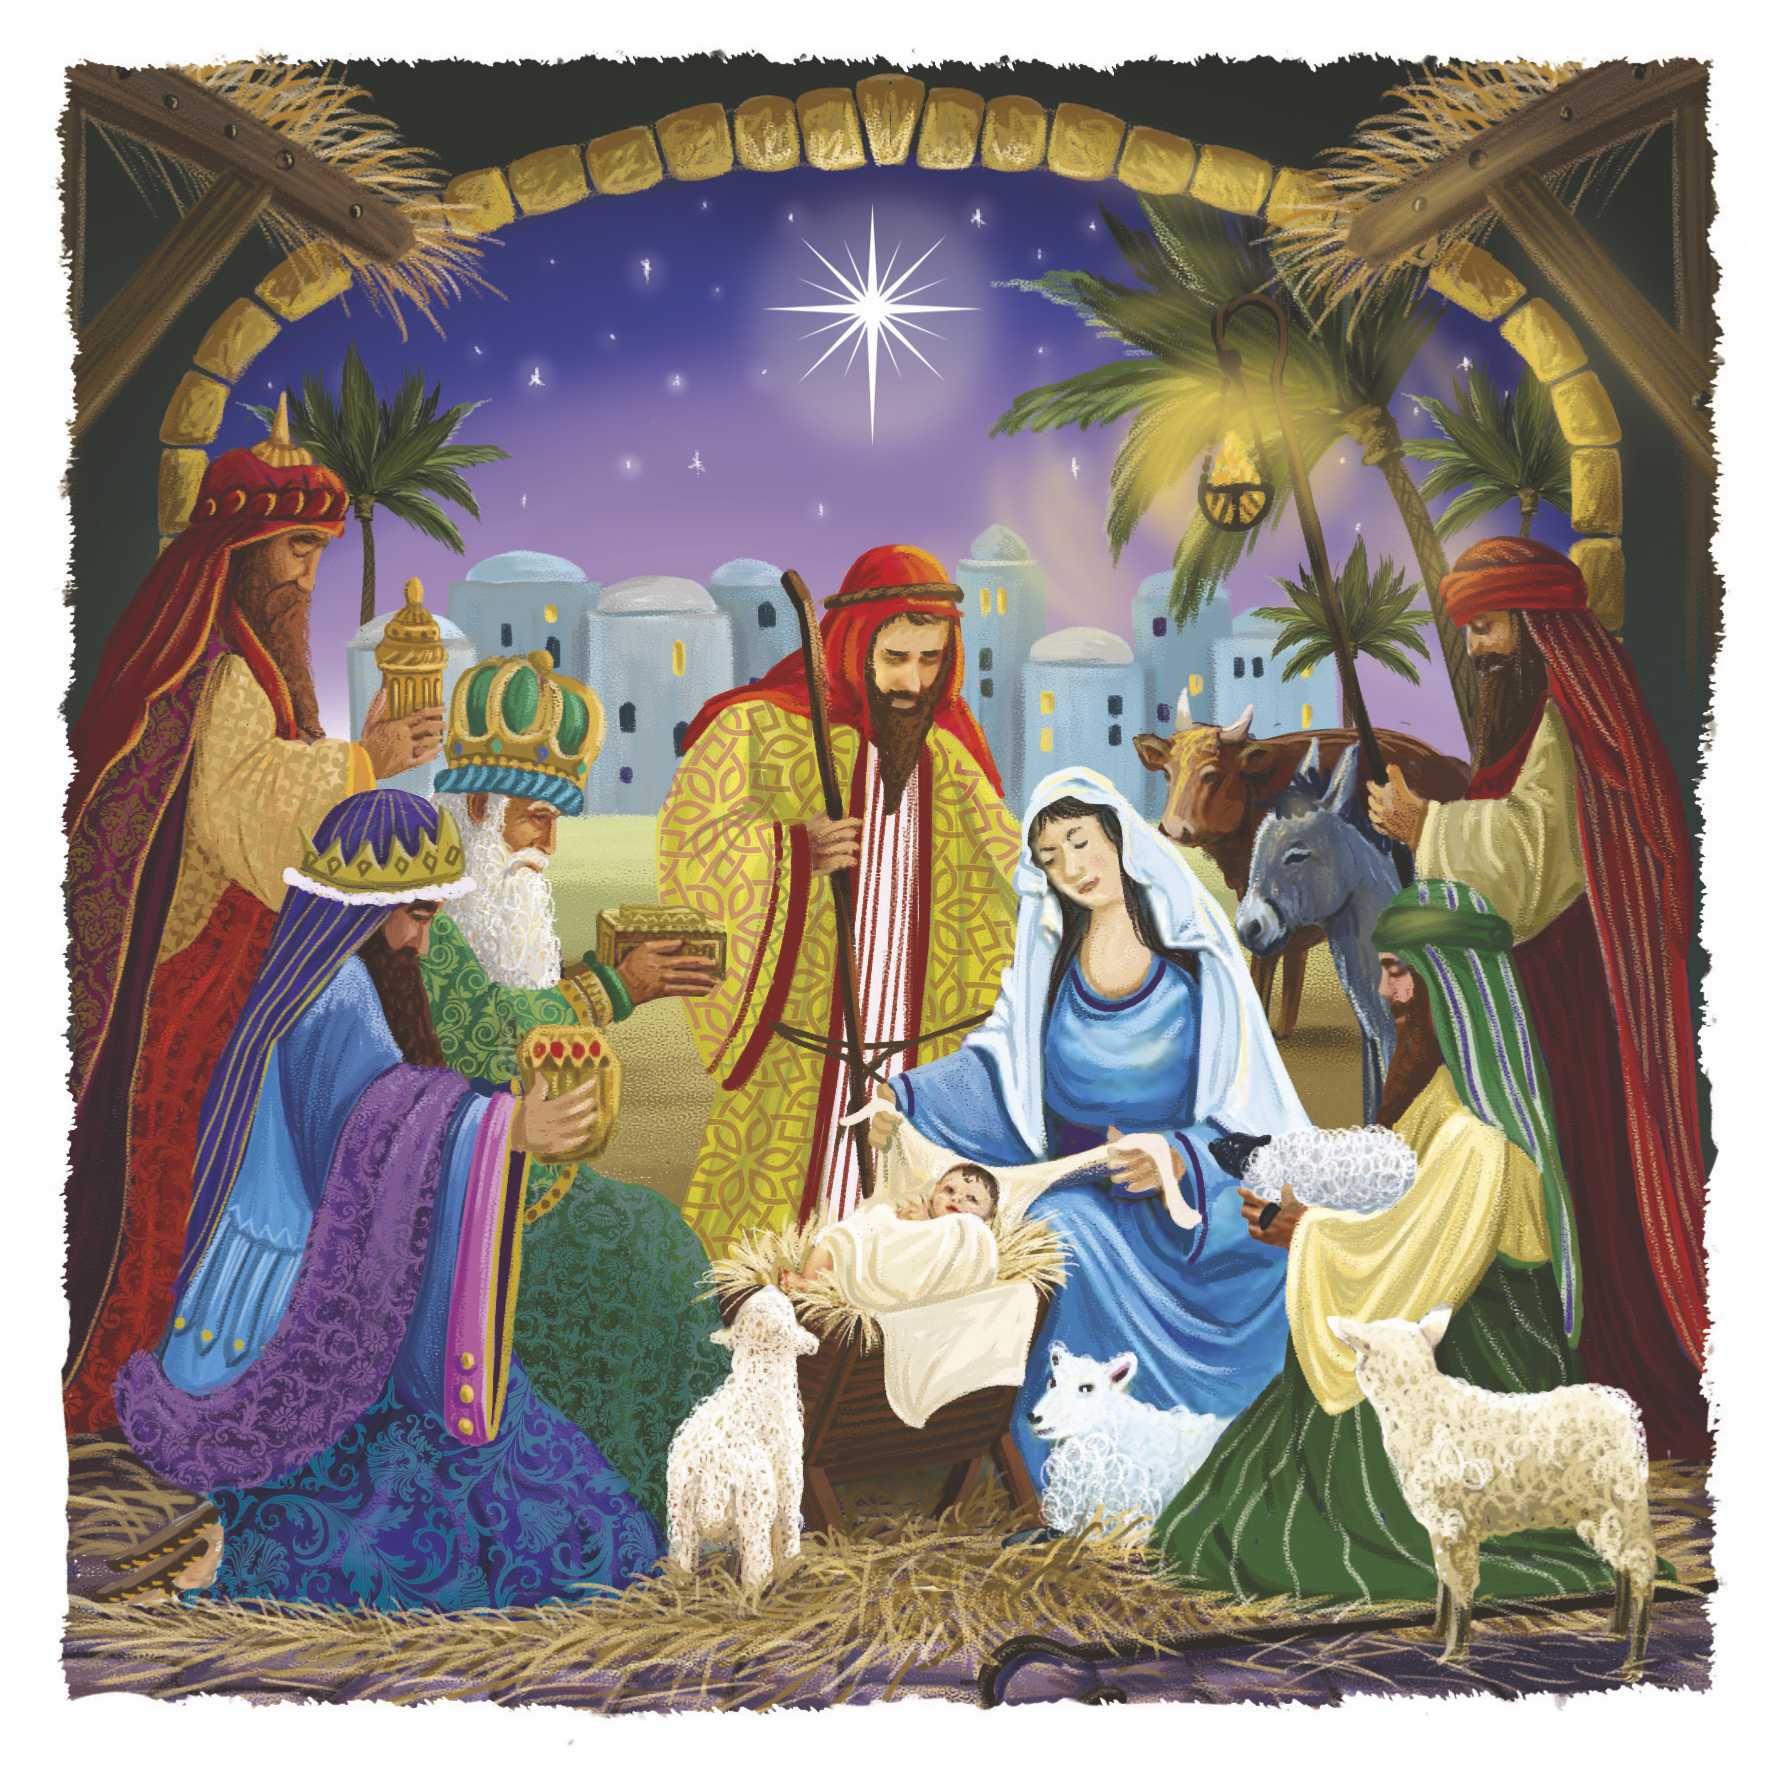 Illustration of a colourful nativity scene.